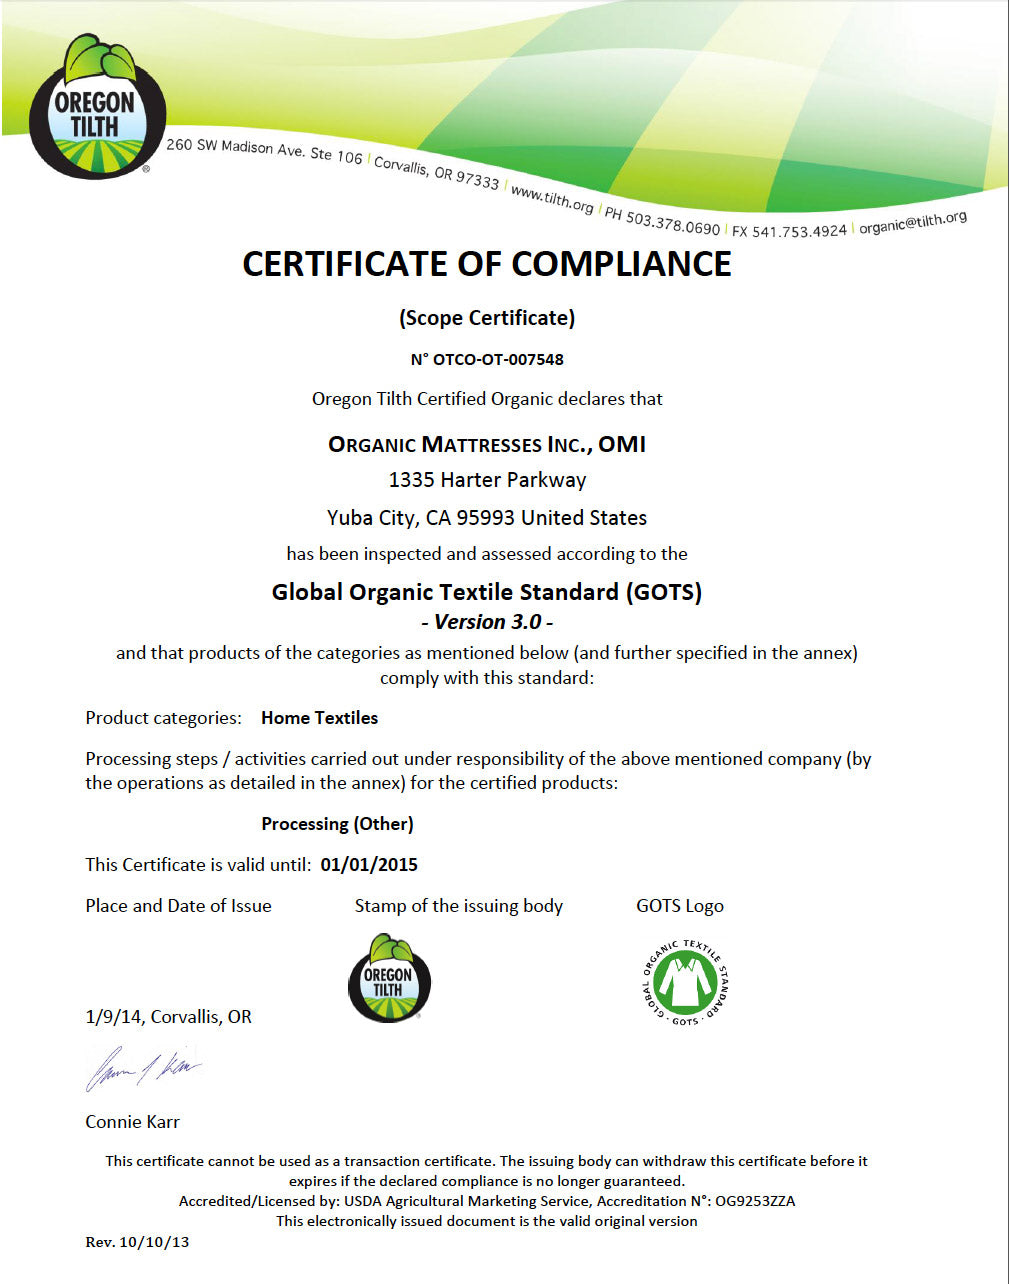 GOTS (Global Organic Textile Standard) Certification